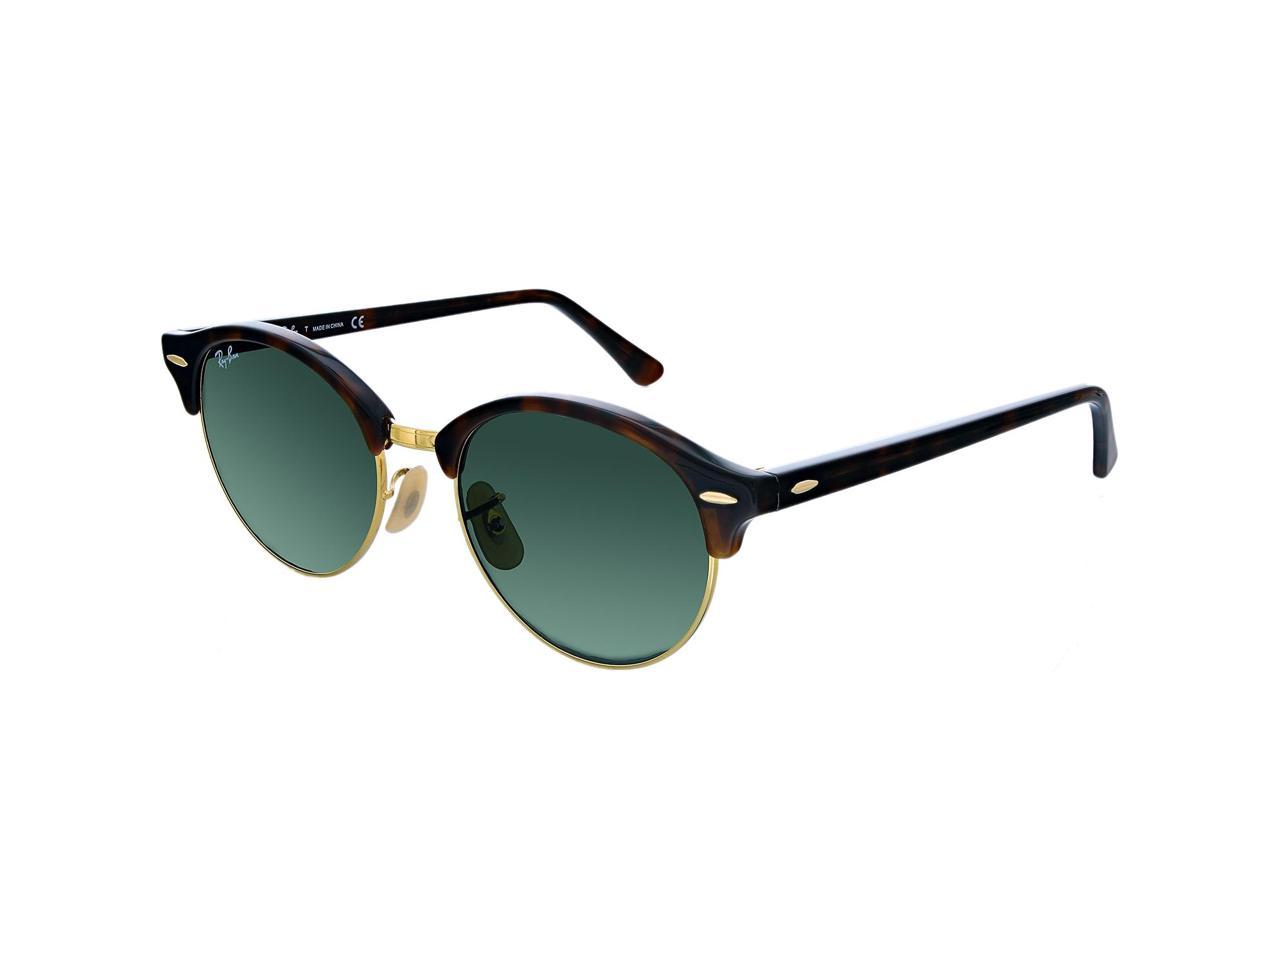 Ray Ban 0rb4246 Phantos Sunglasses For Unisex Size 51 Green Newegg Com